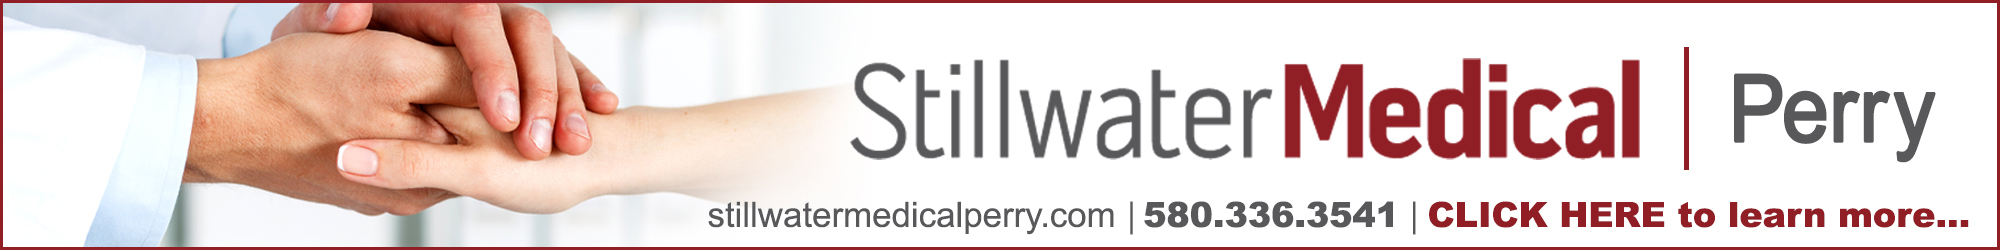 Stillwater Medical Perry